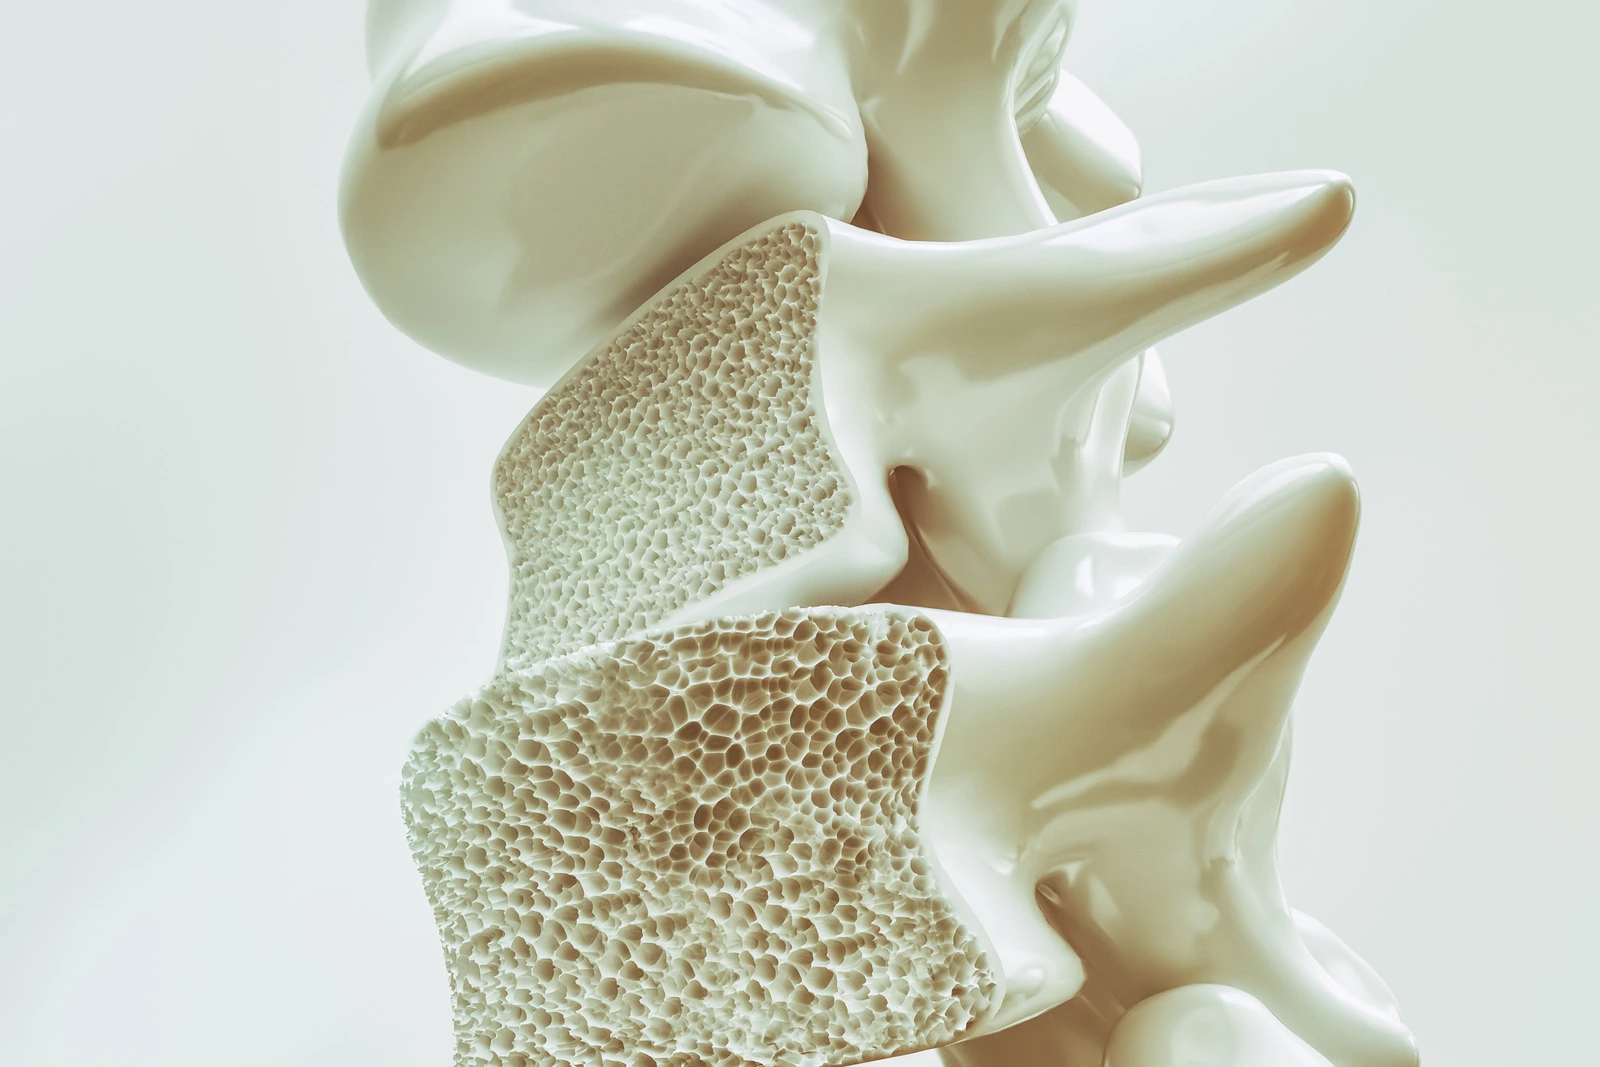 Apa Itu Osteoporosis ?